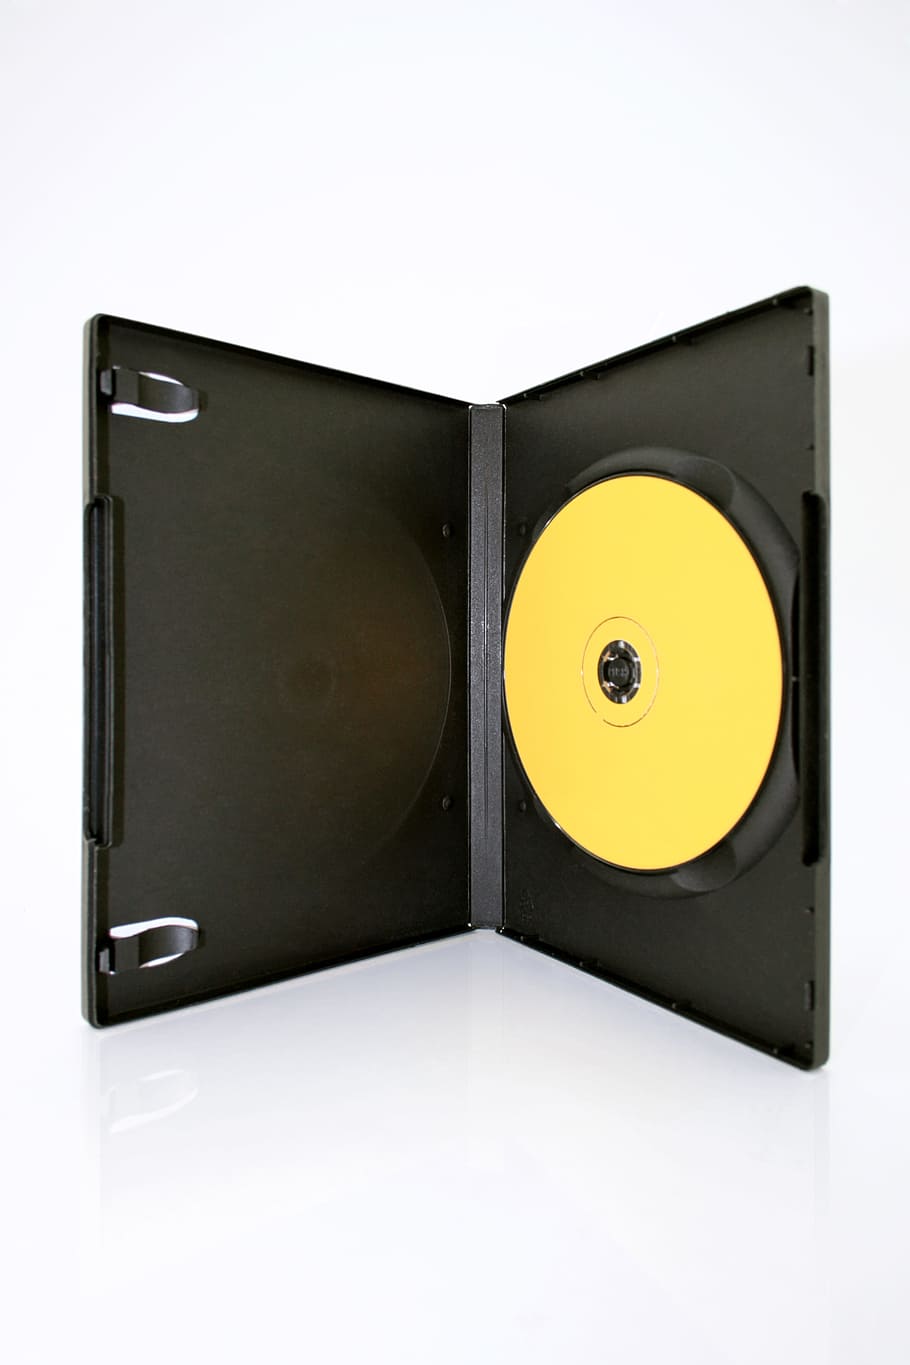 black, blank, bonus, box, cd, compact, computer, container, digital, disk